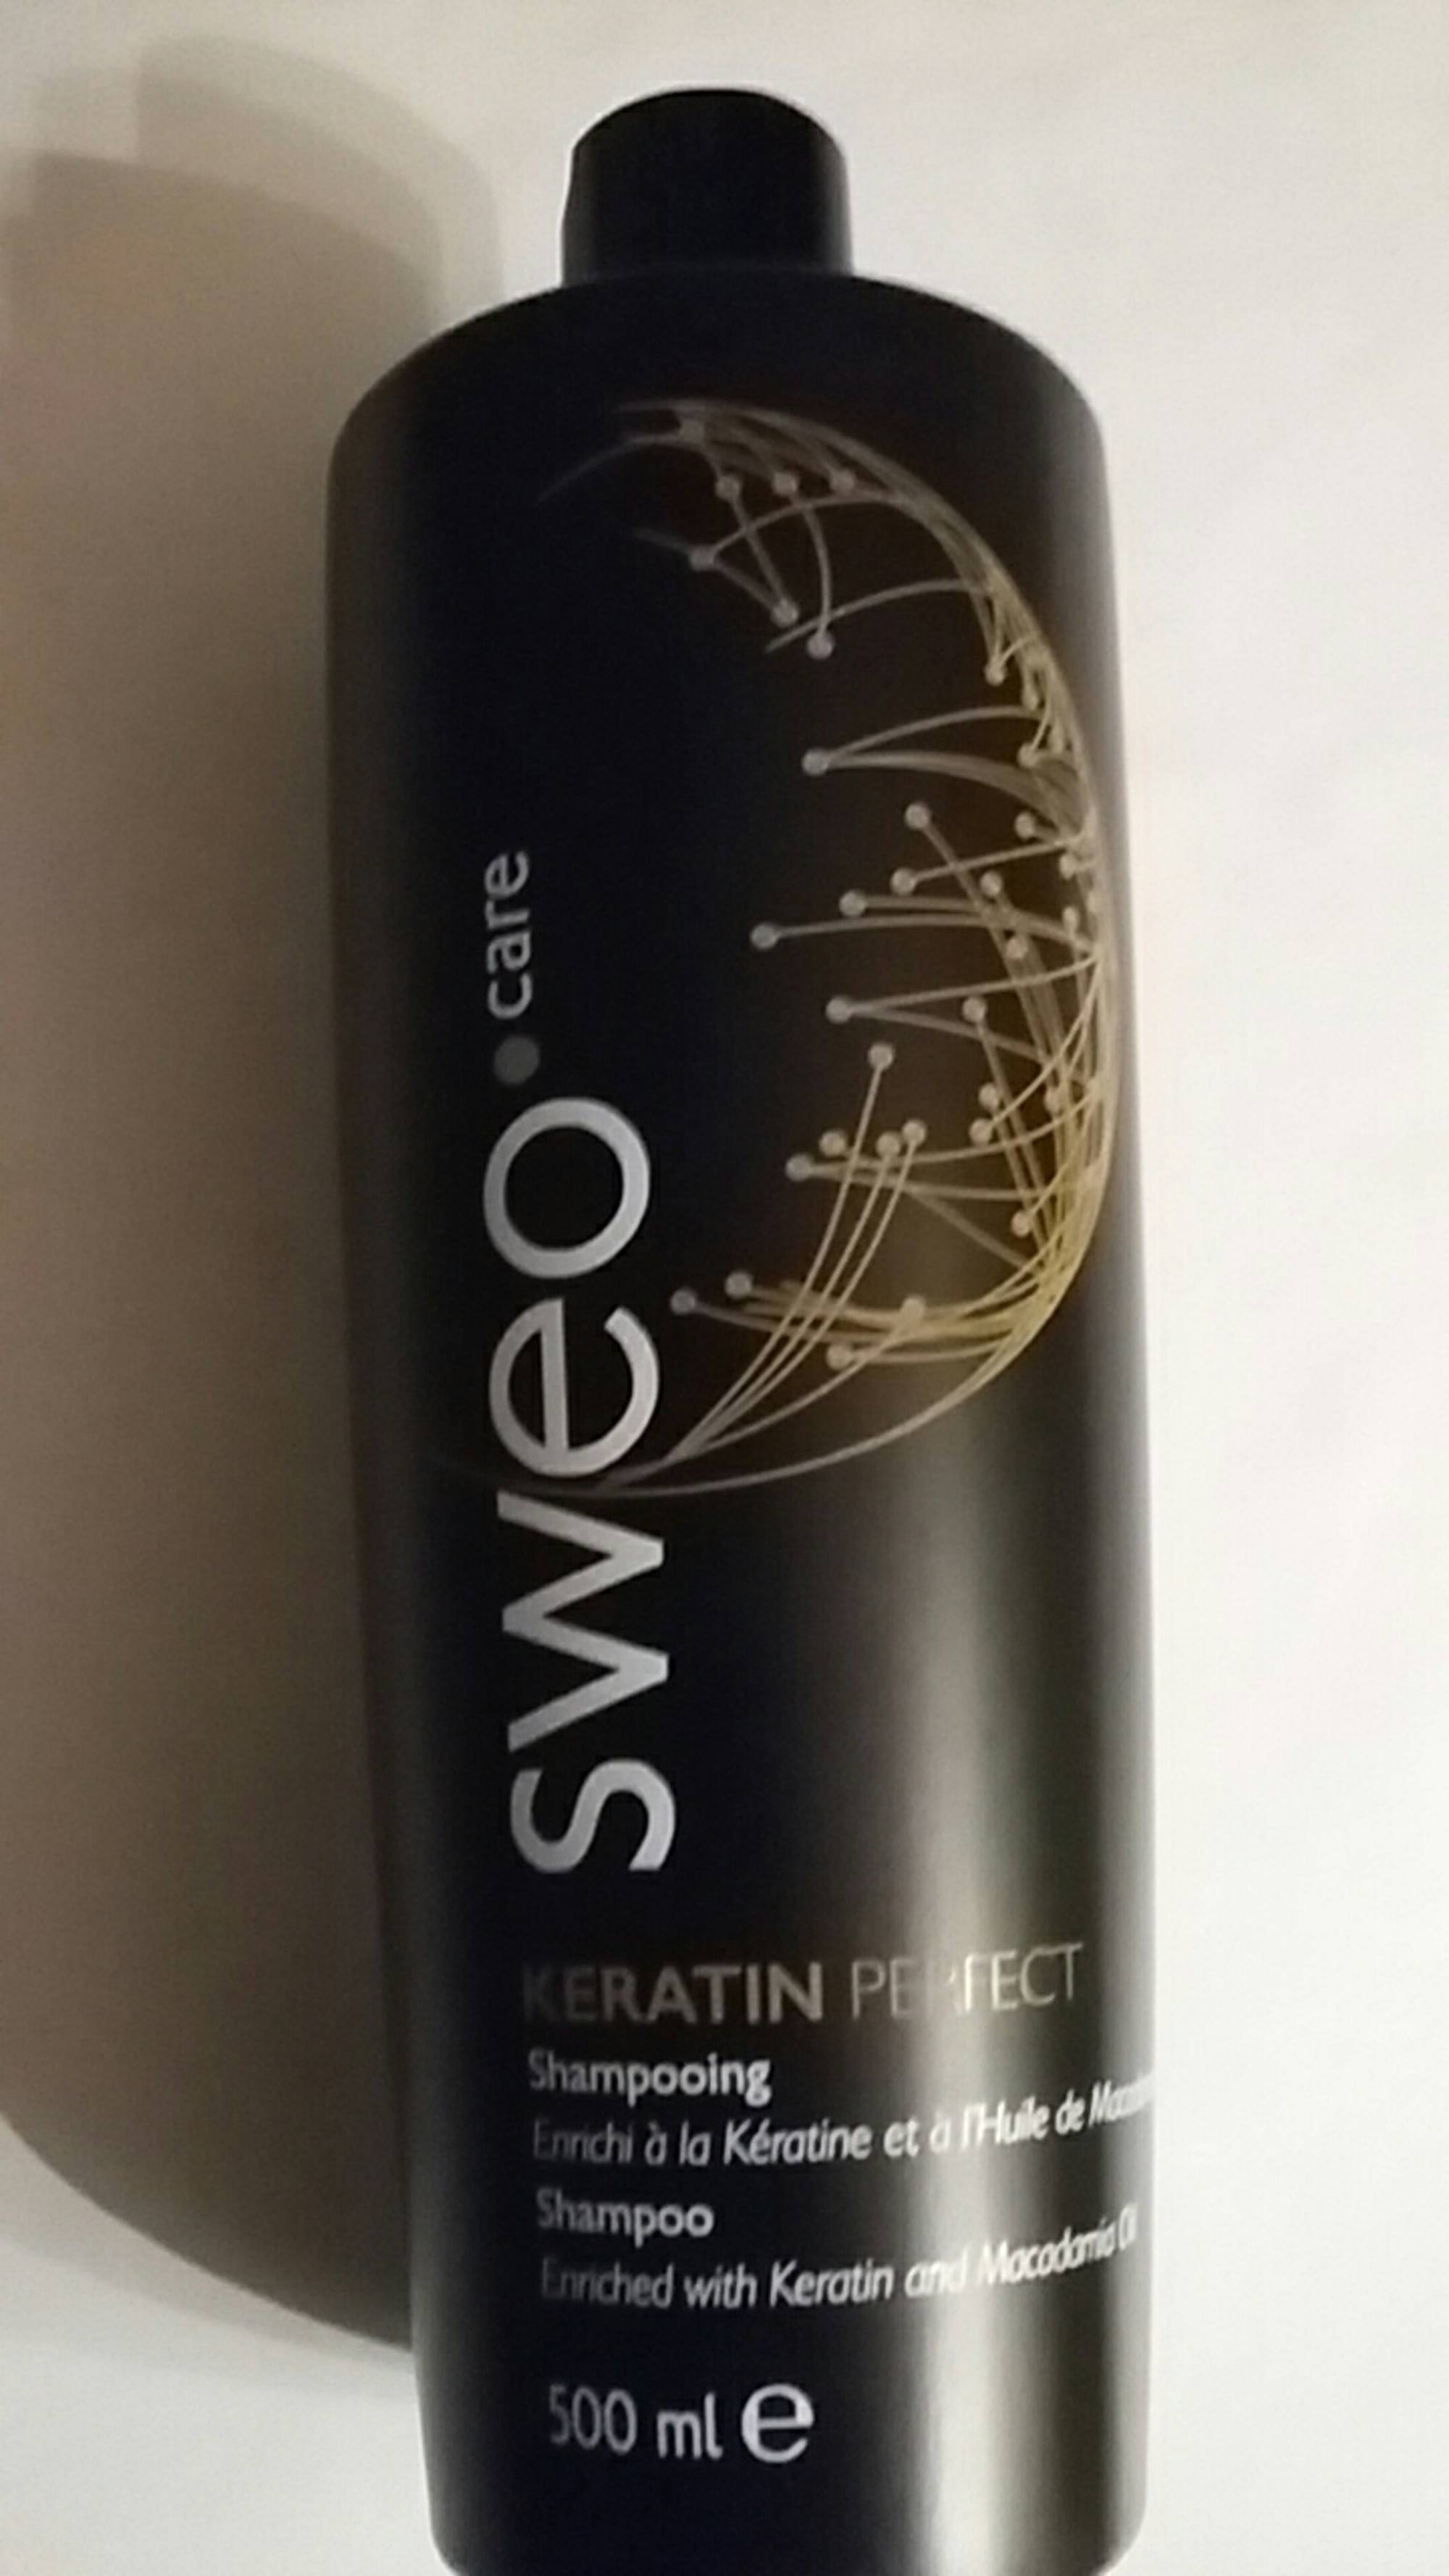 SWEO - Keratin perfect - Shampooing